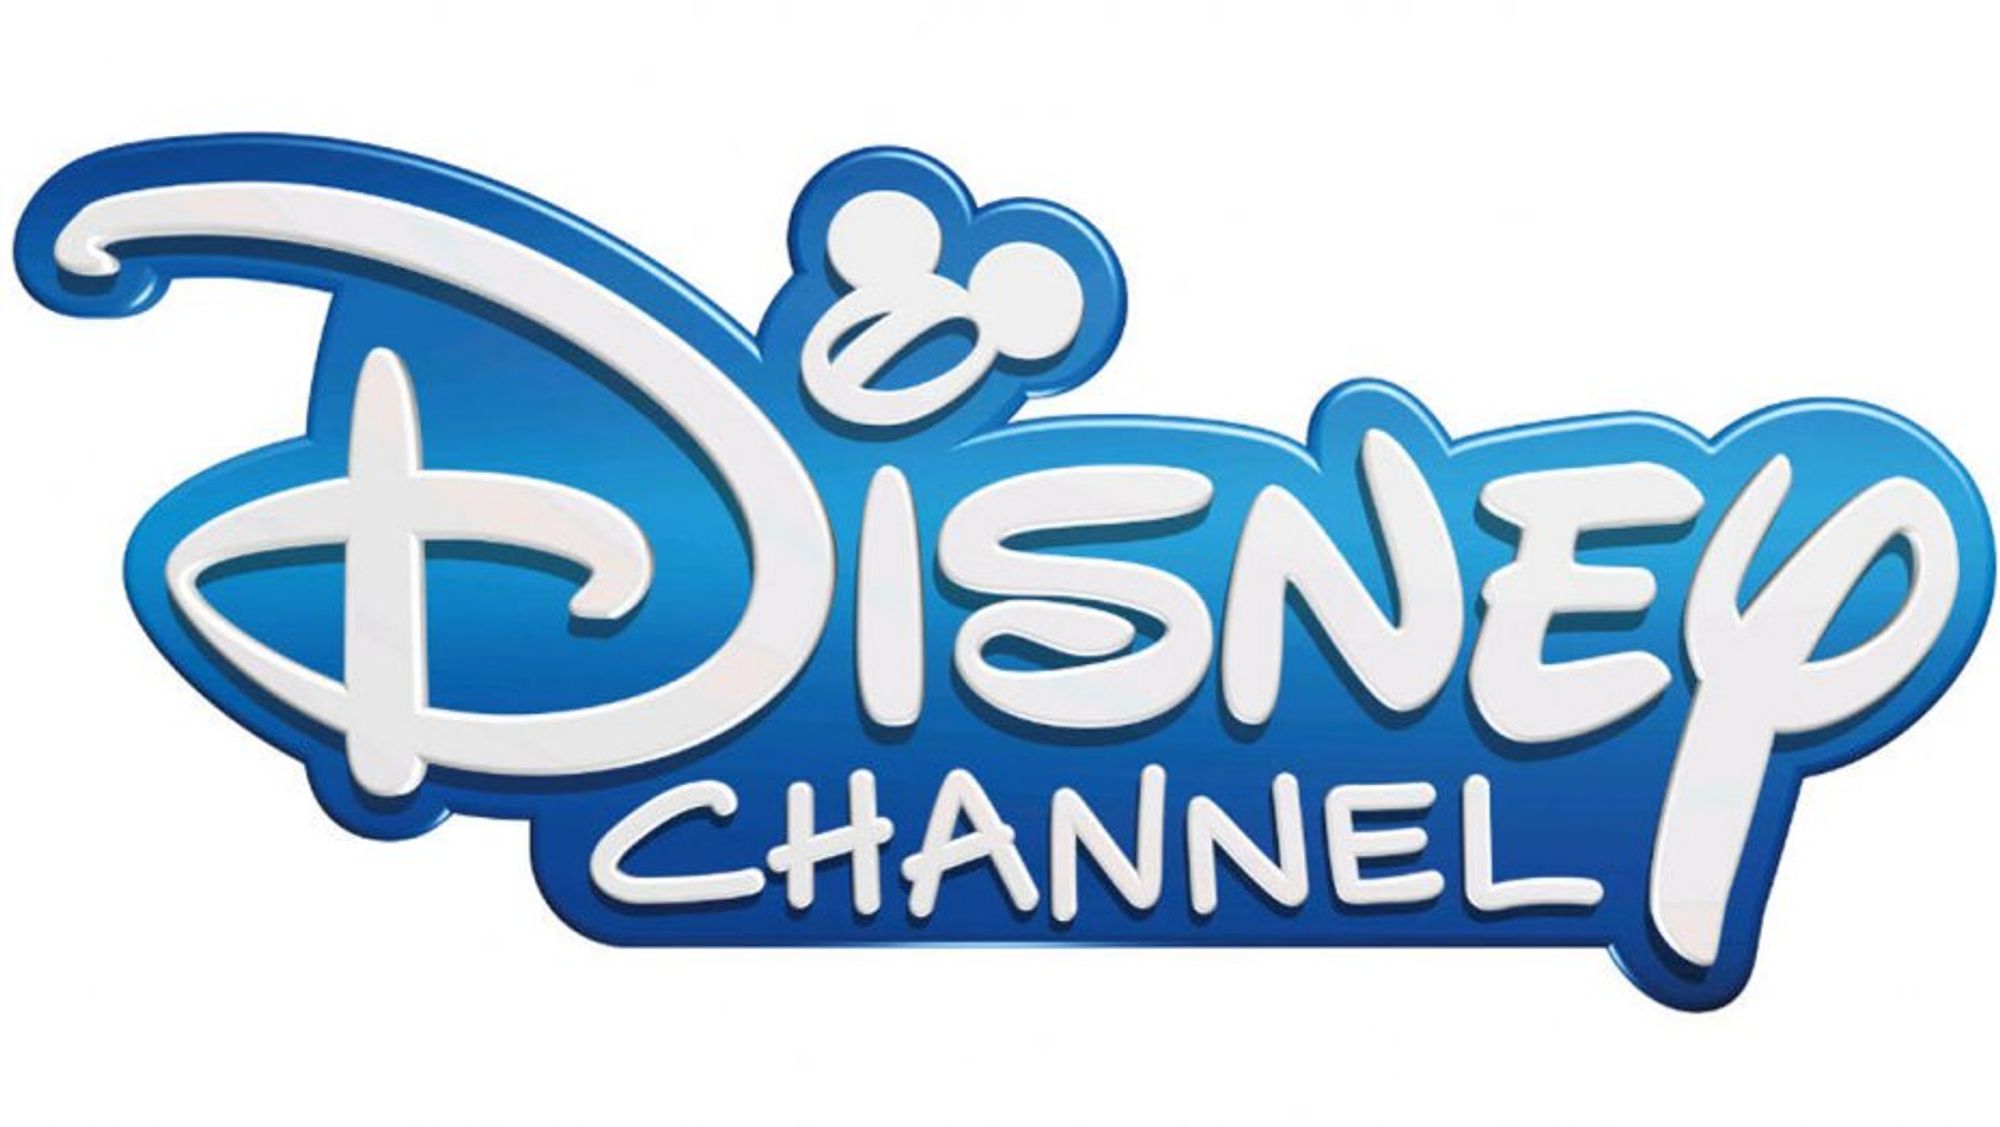 disney_channel_logo_a_l.jpg